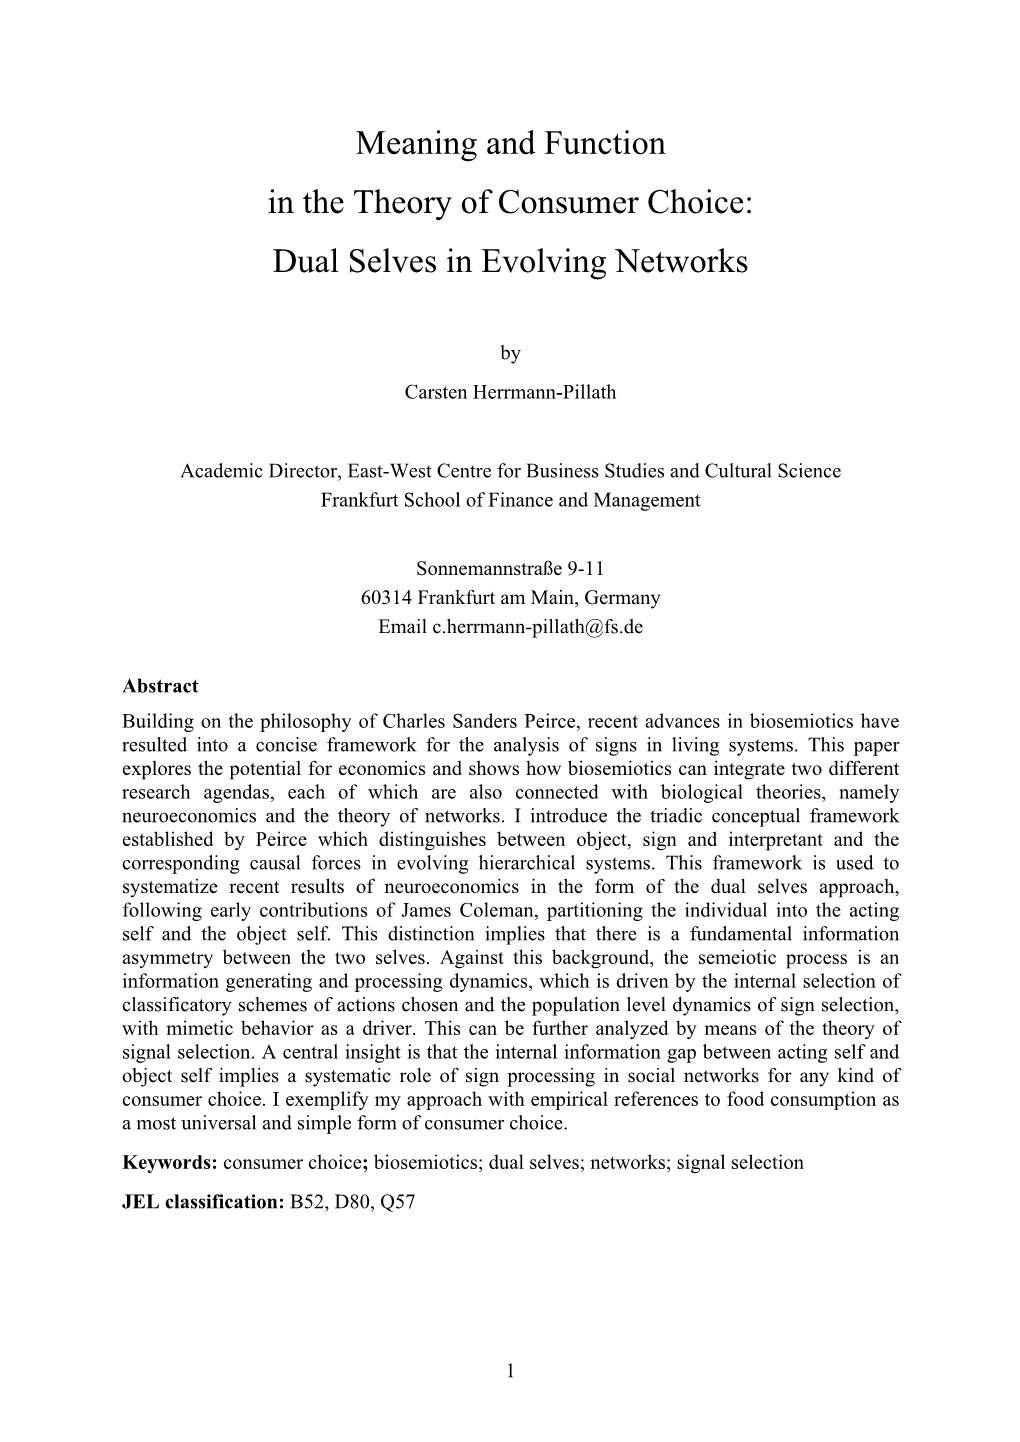 Dual Selves in Evolving Networks